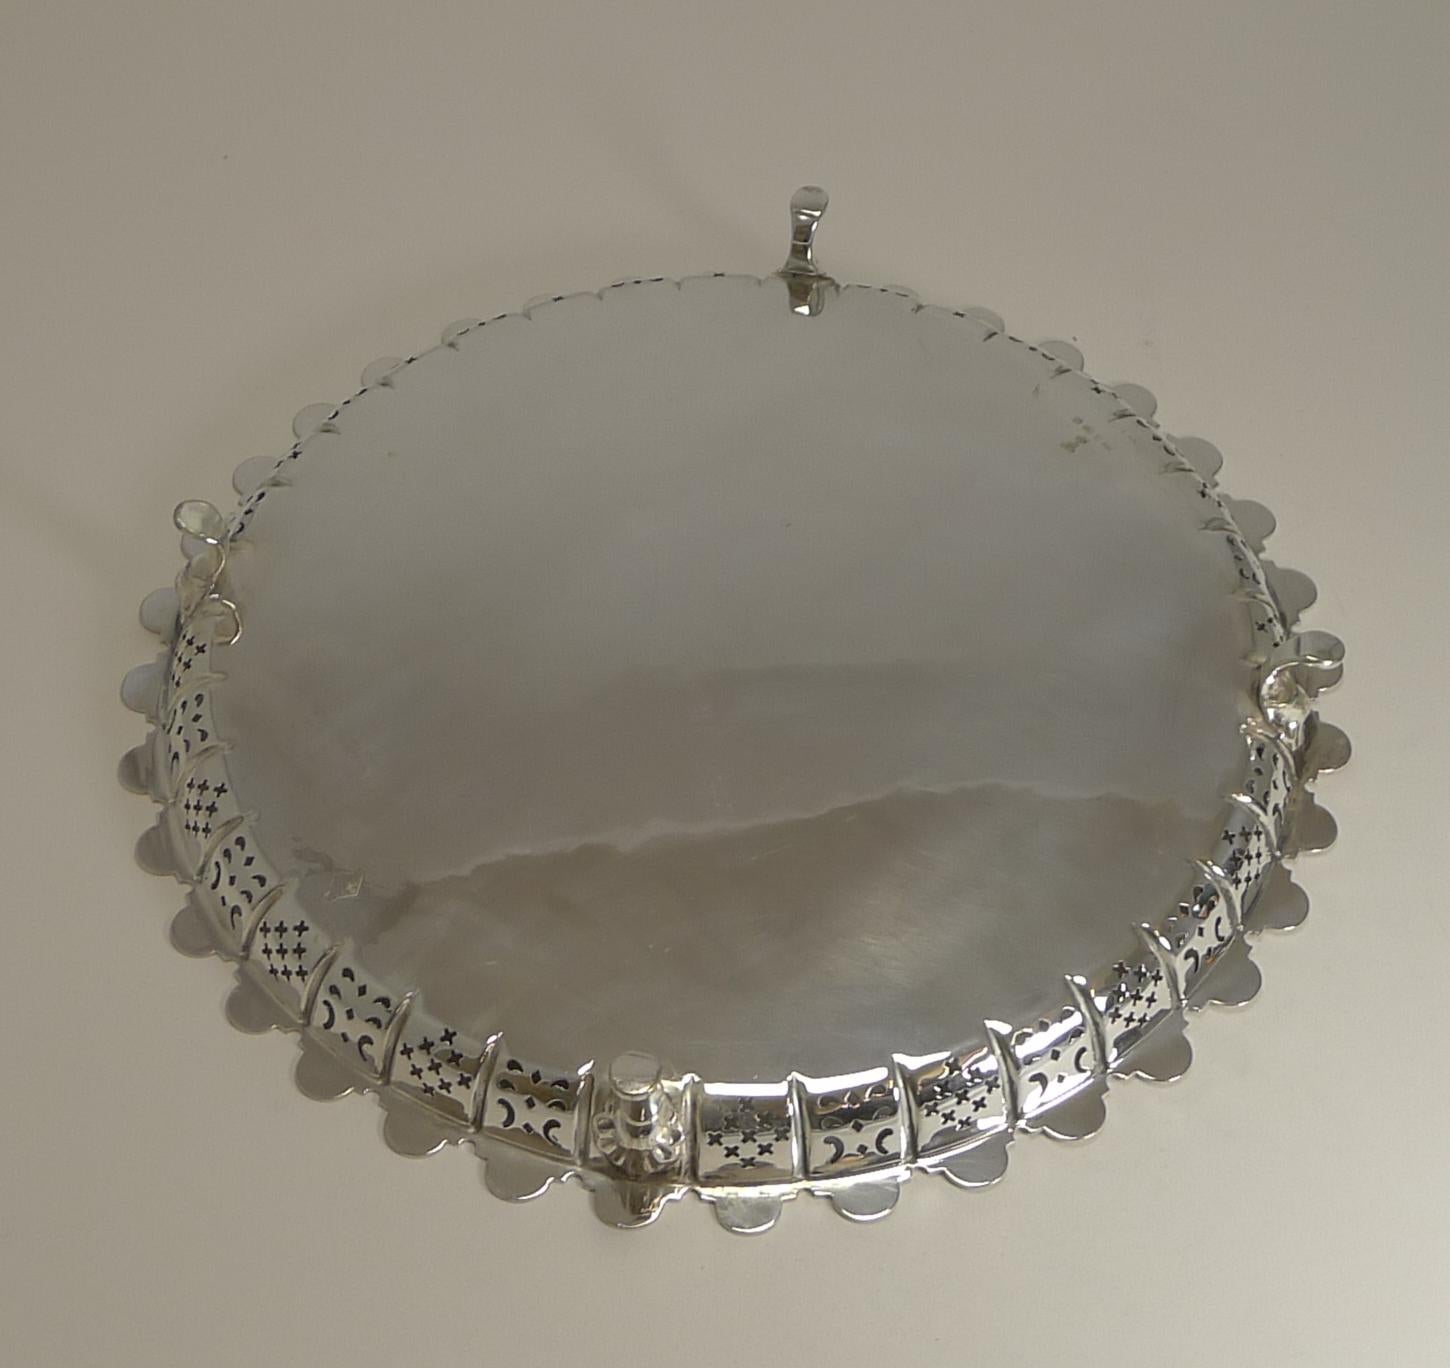 Large Antique English Silver Plated Circular Salver / Tray - 1855 1